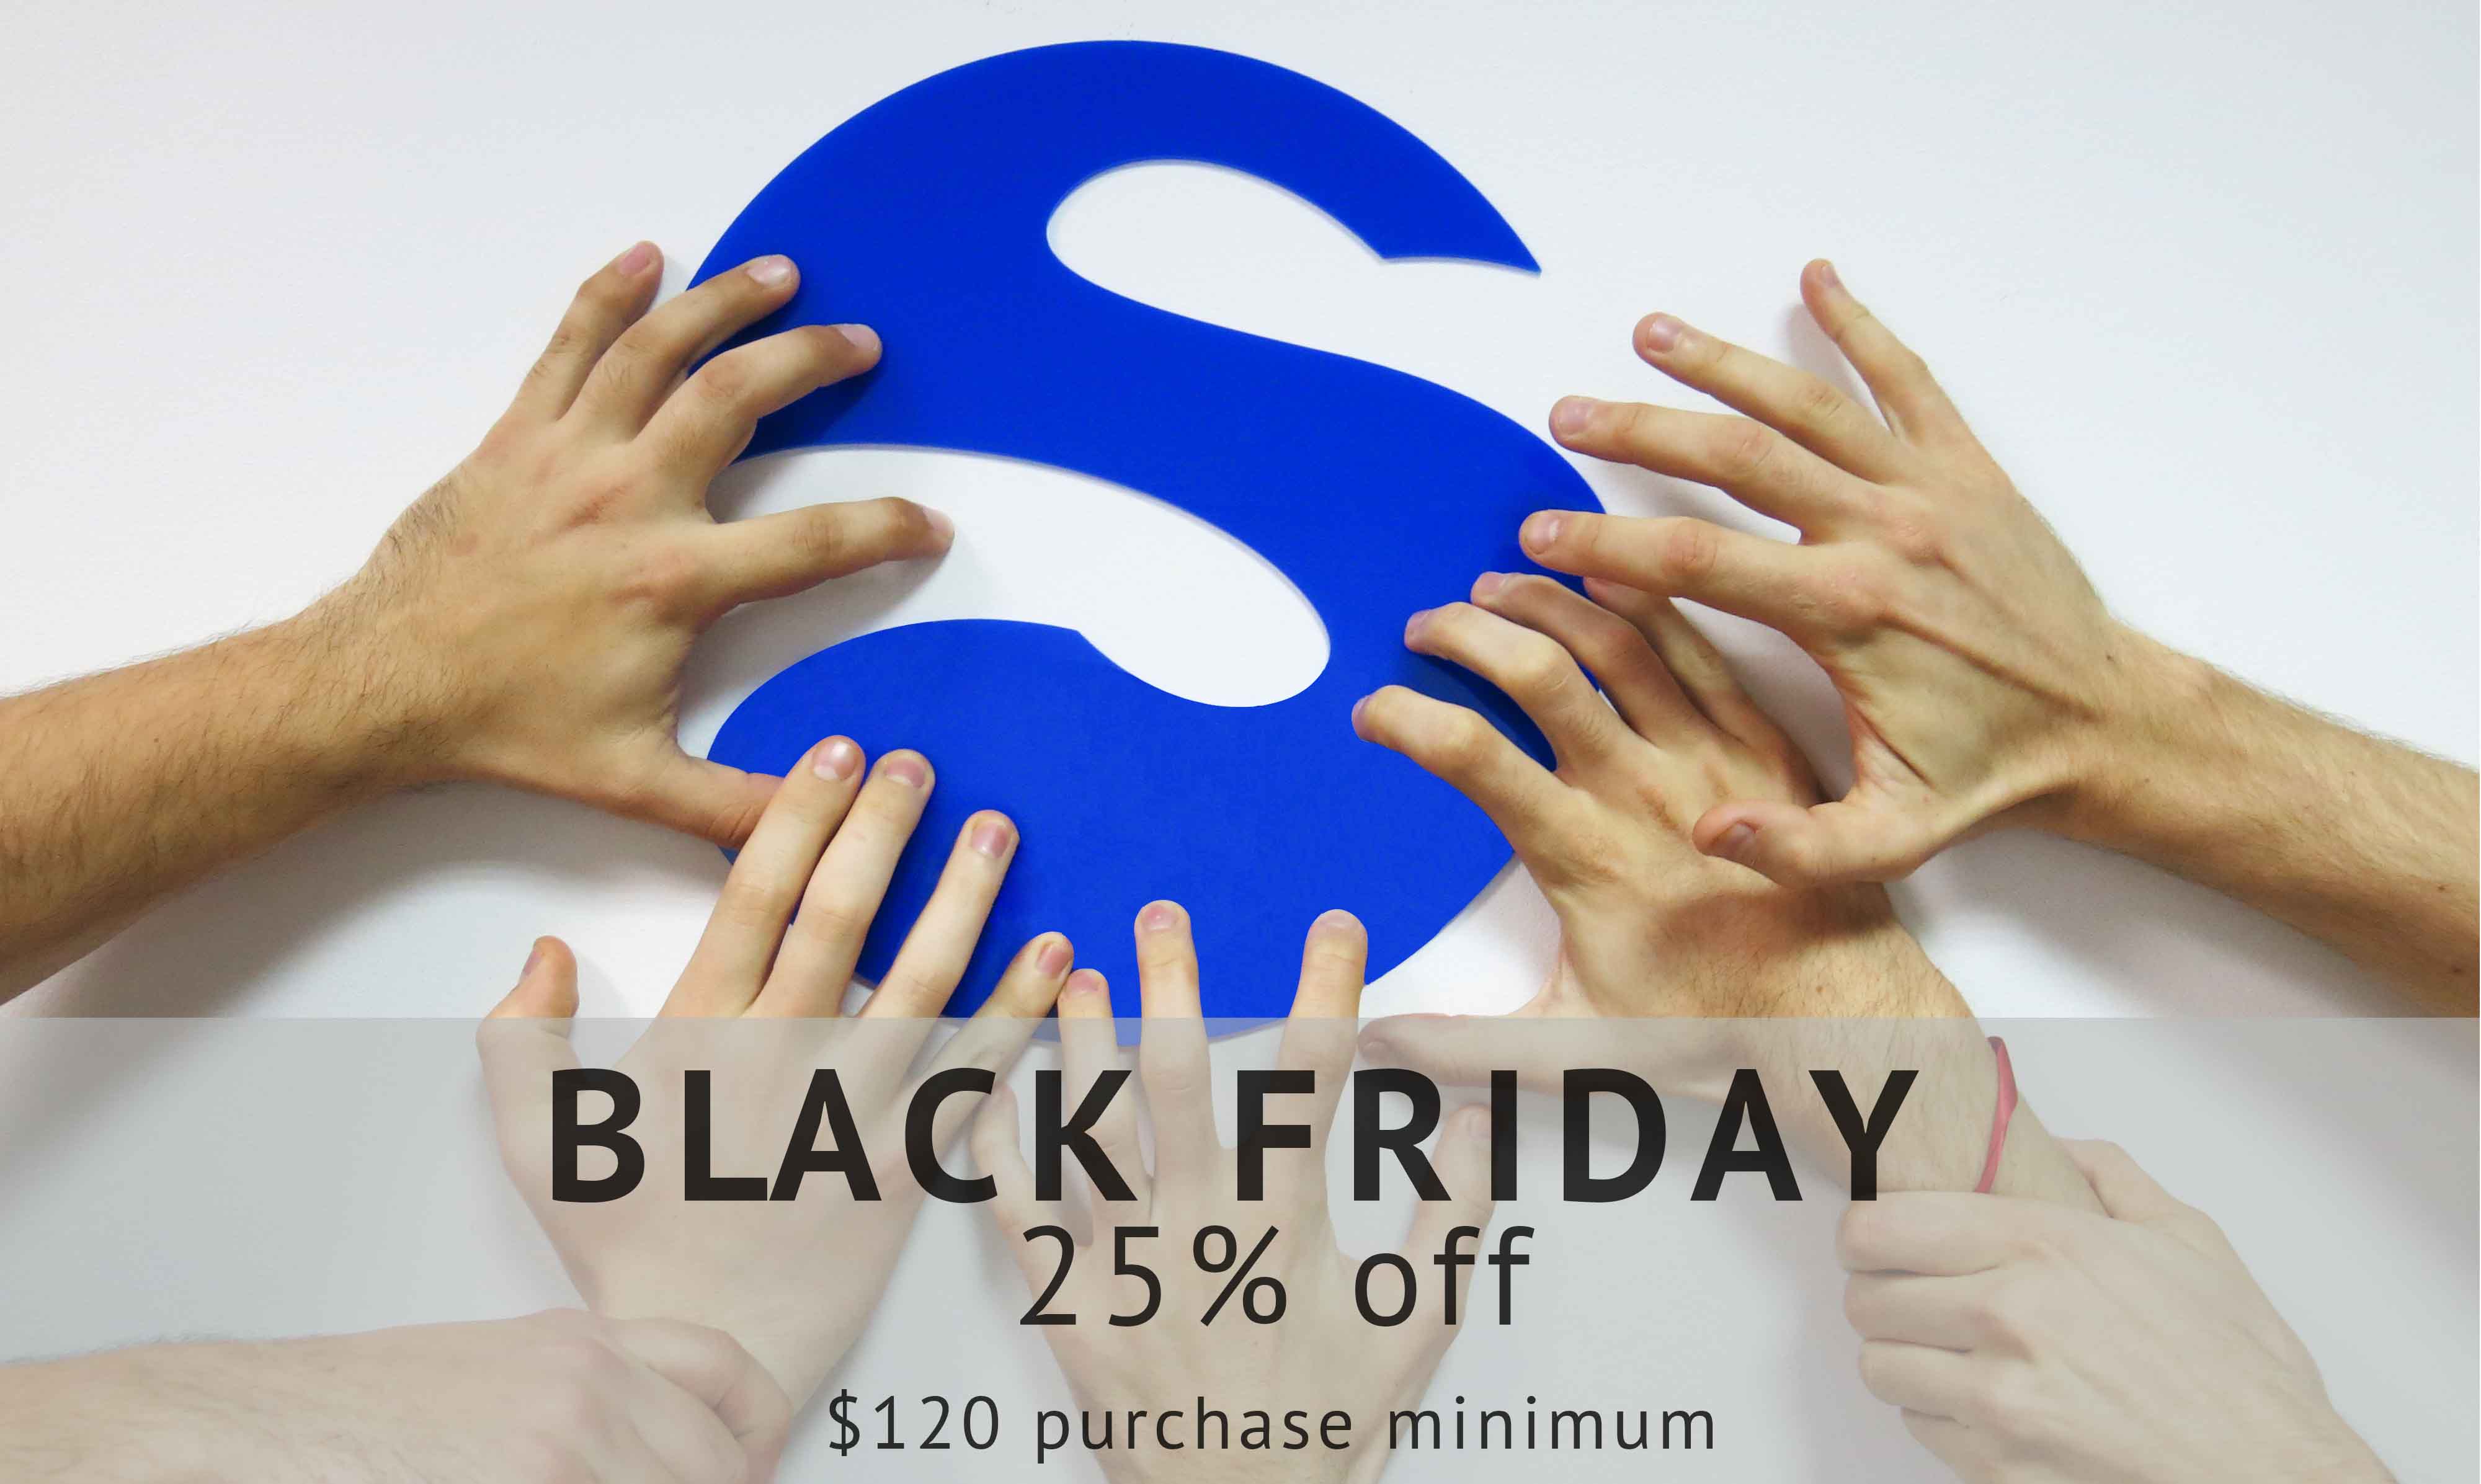 Benefit Black Friday offer 25% for all 3D printing & Laser Cut!